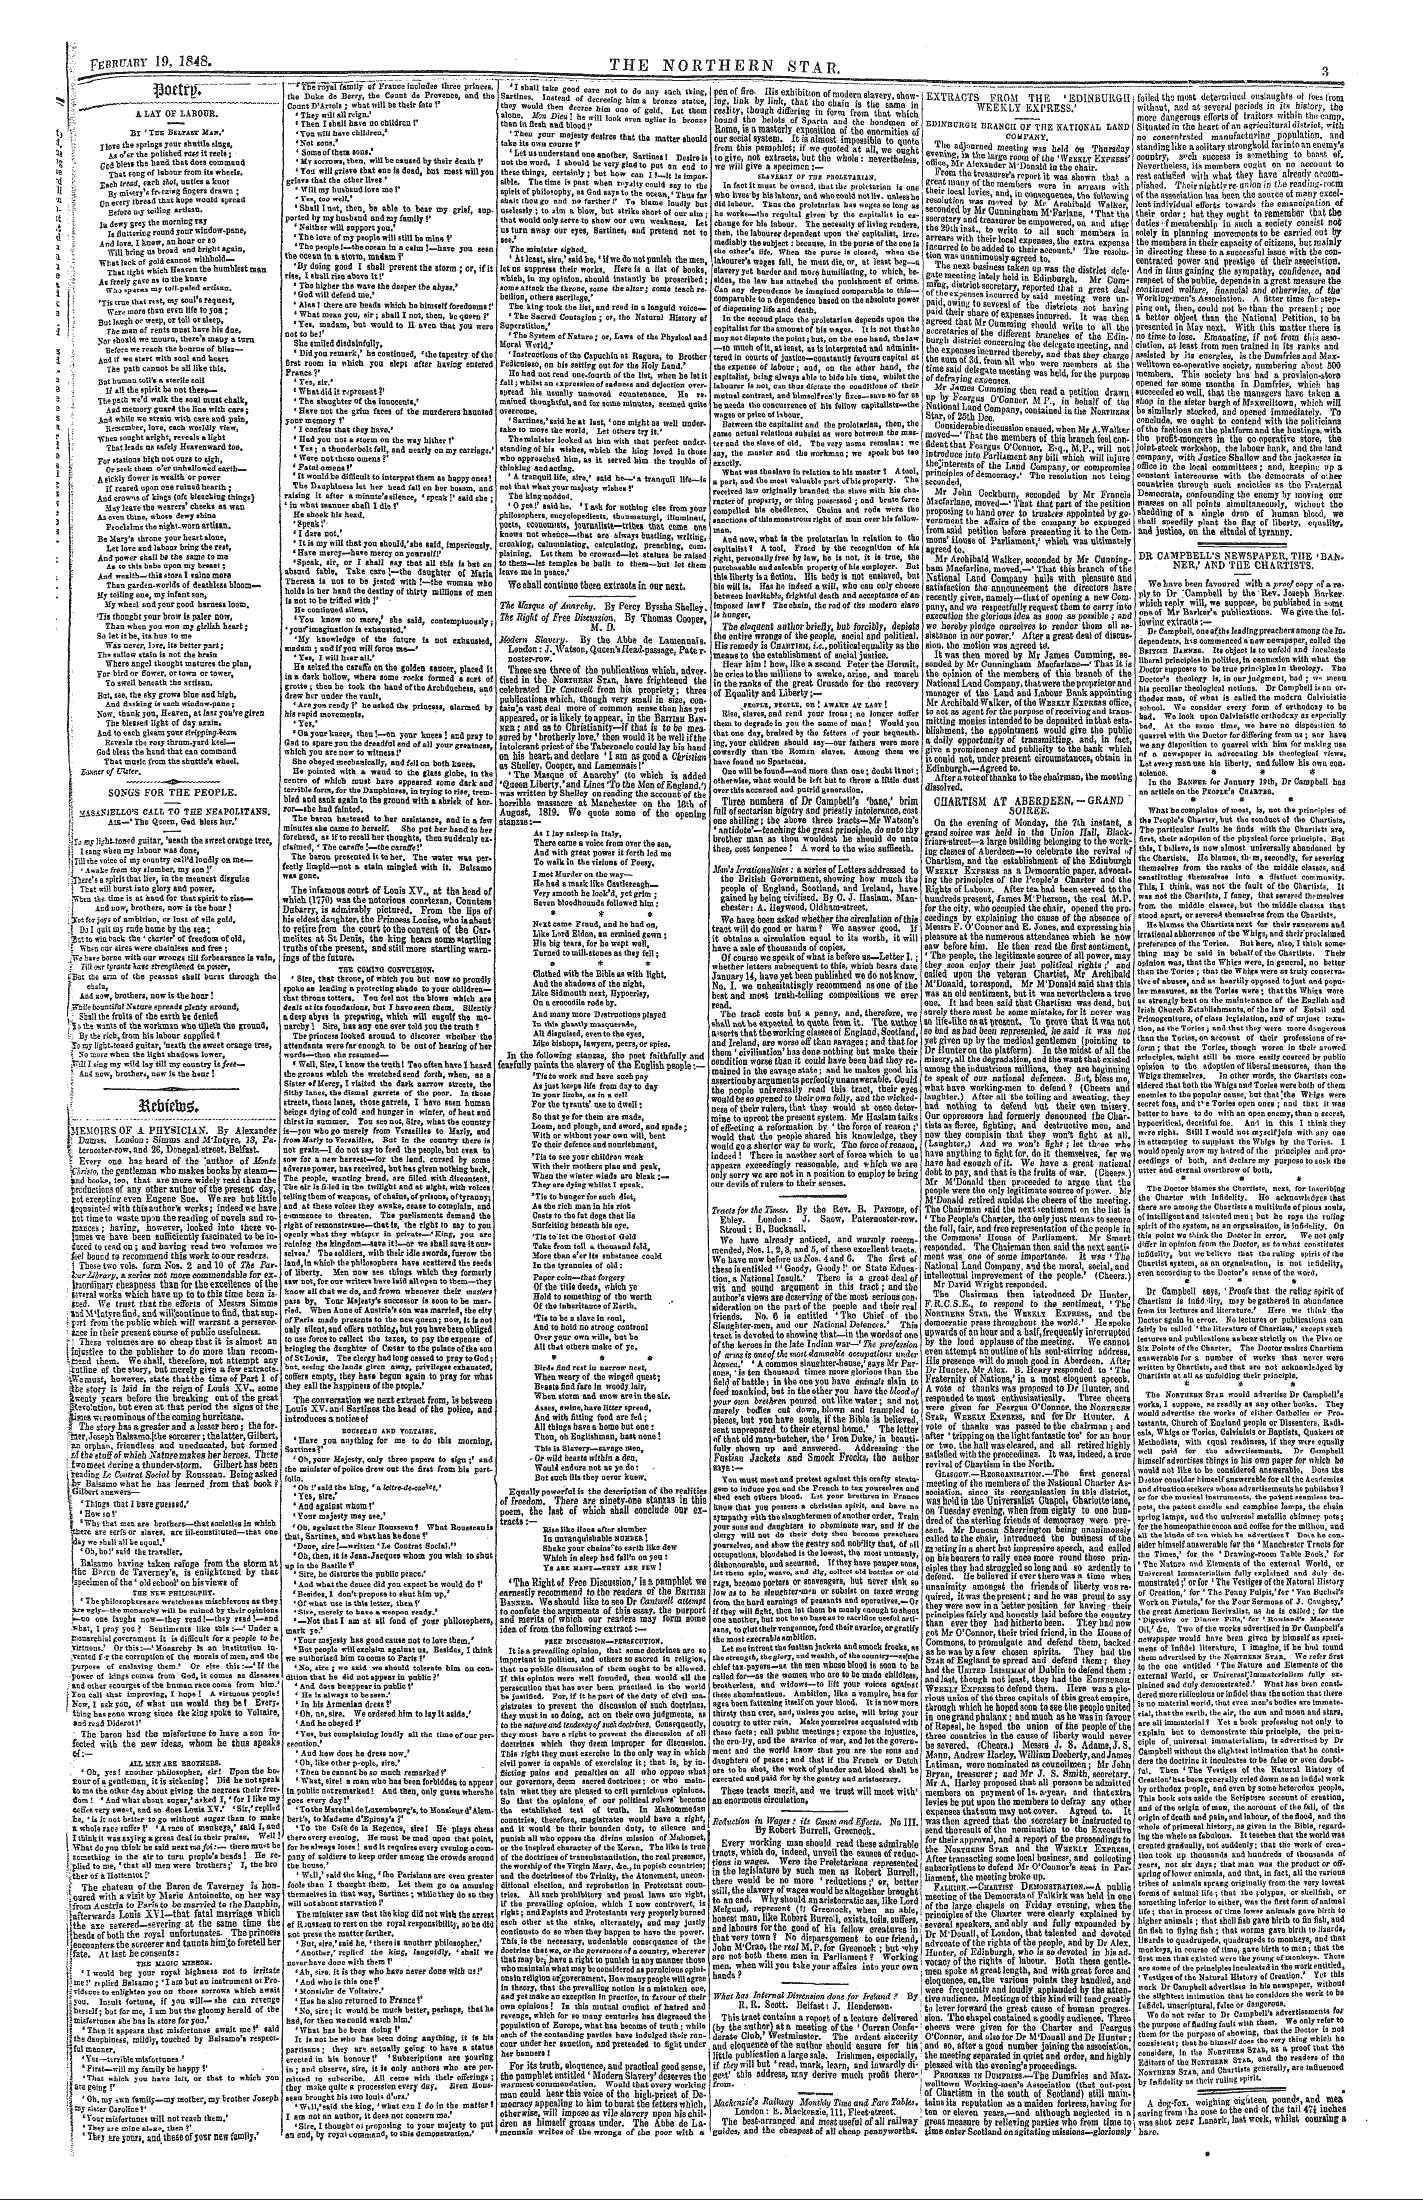 Northern Star (1837-1852): jS F Y, 2nd edition - A Dog-Fox, Weighing - Eighteen, Pound!-,...